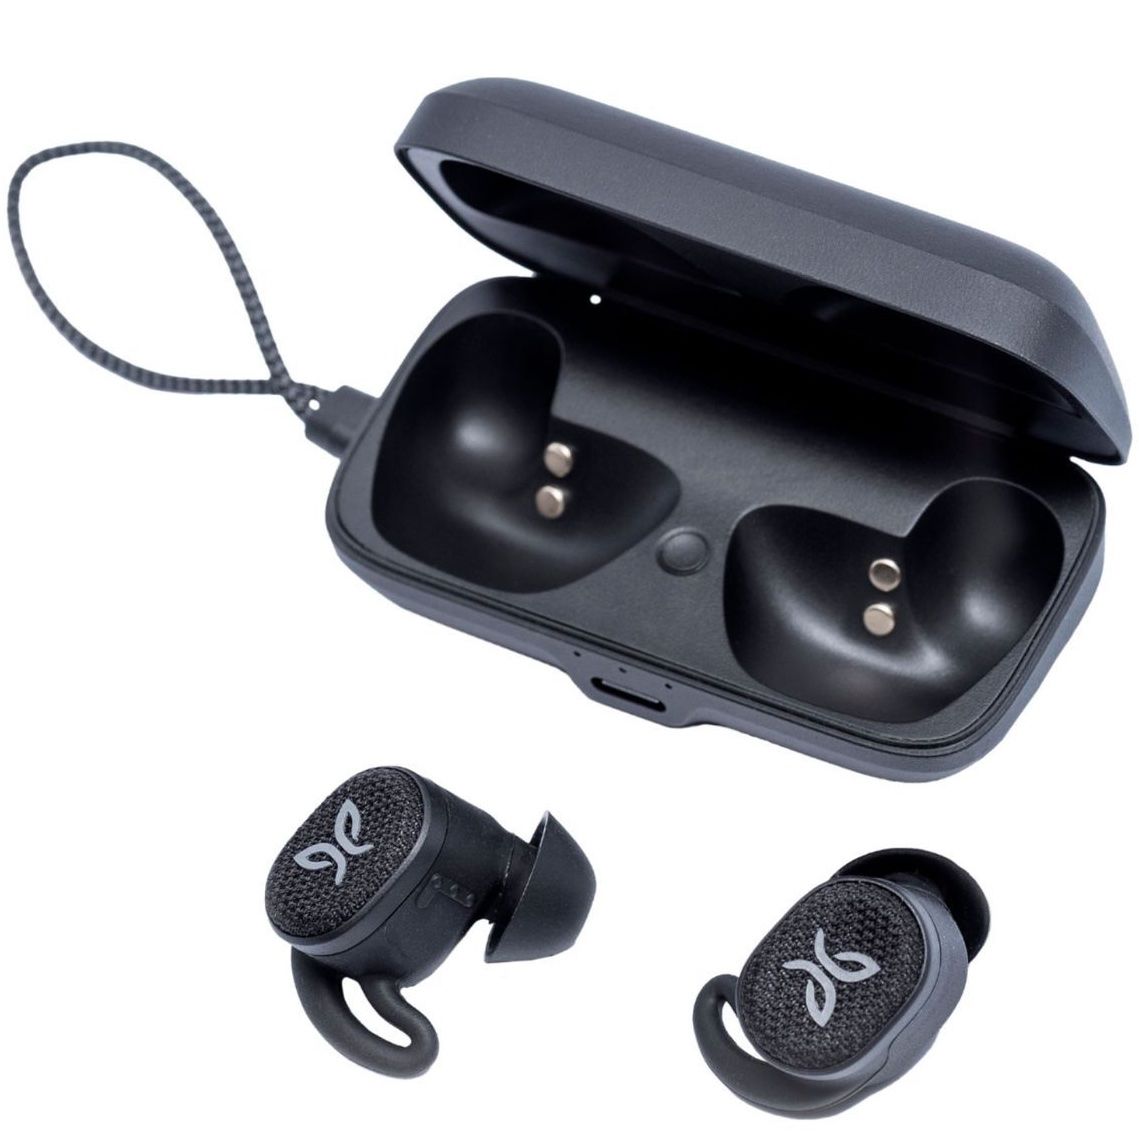 Jabra Elite 7 Pro Headphone Review - Consumer Reports